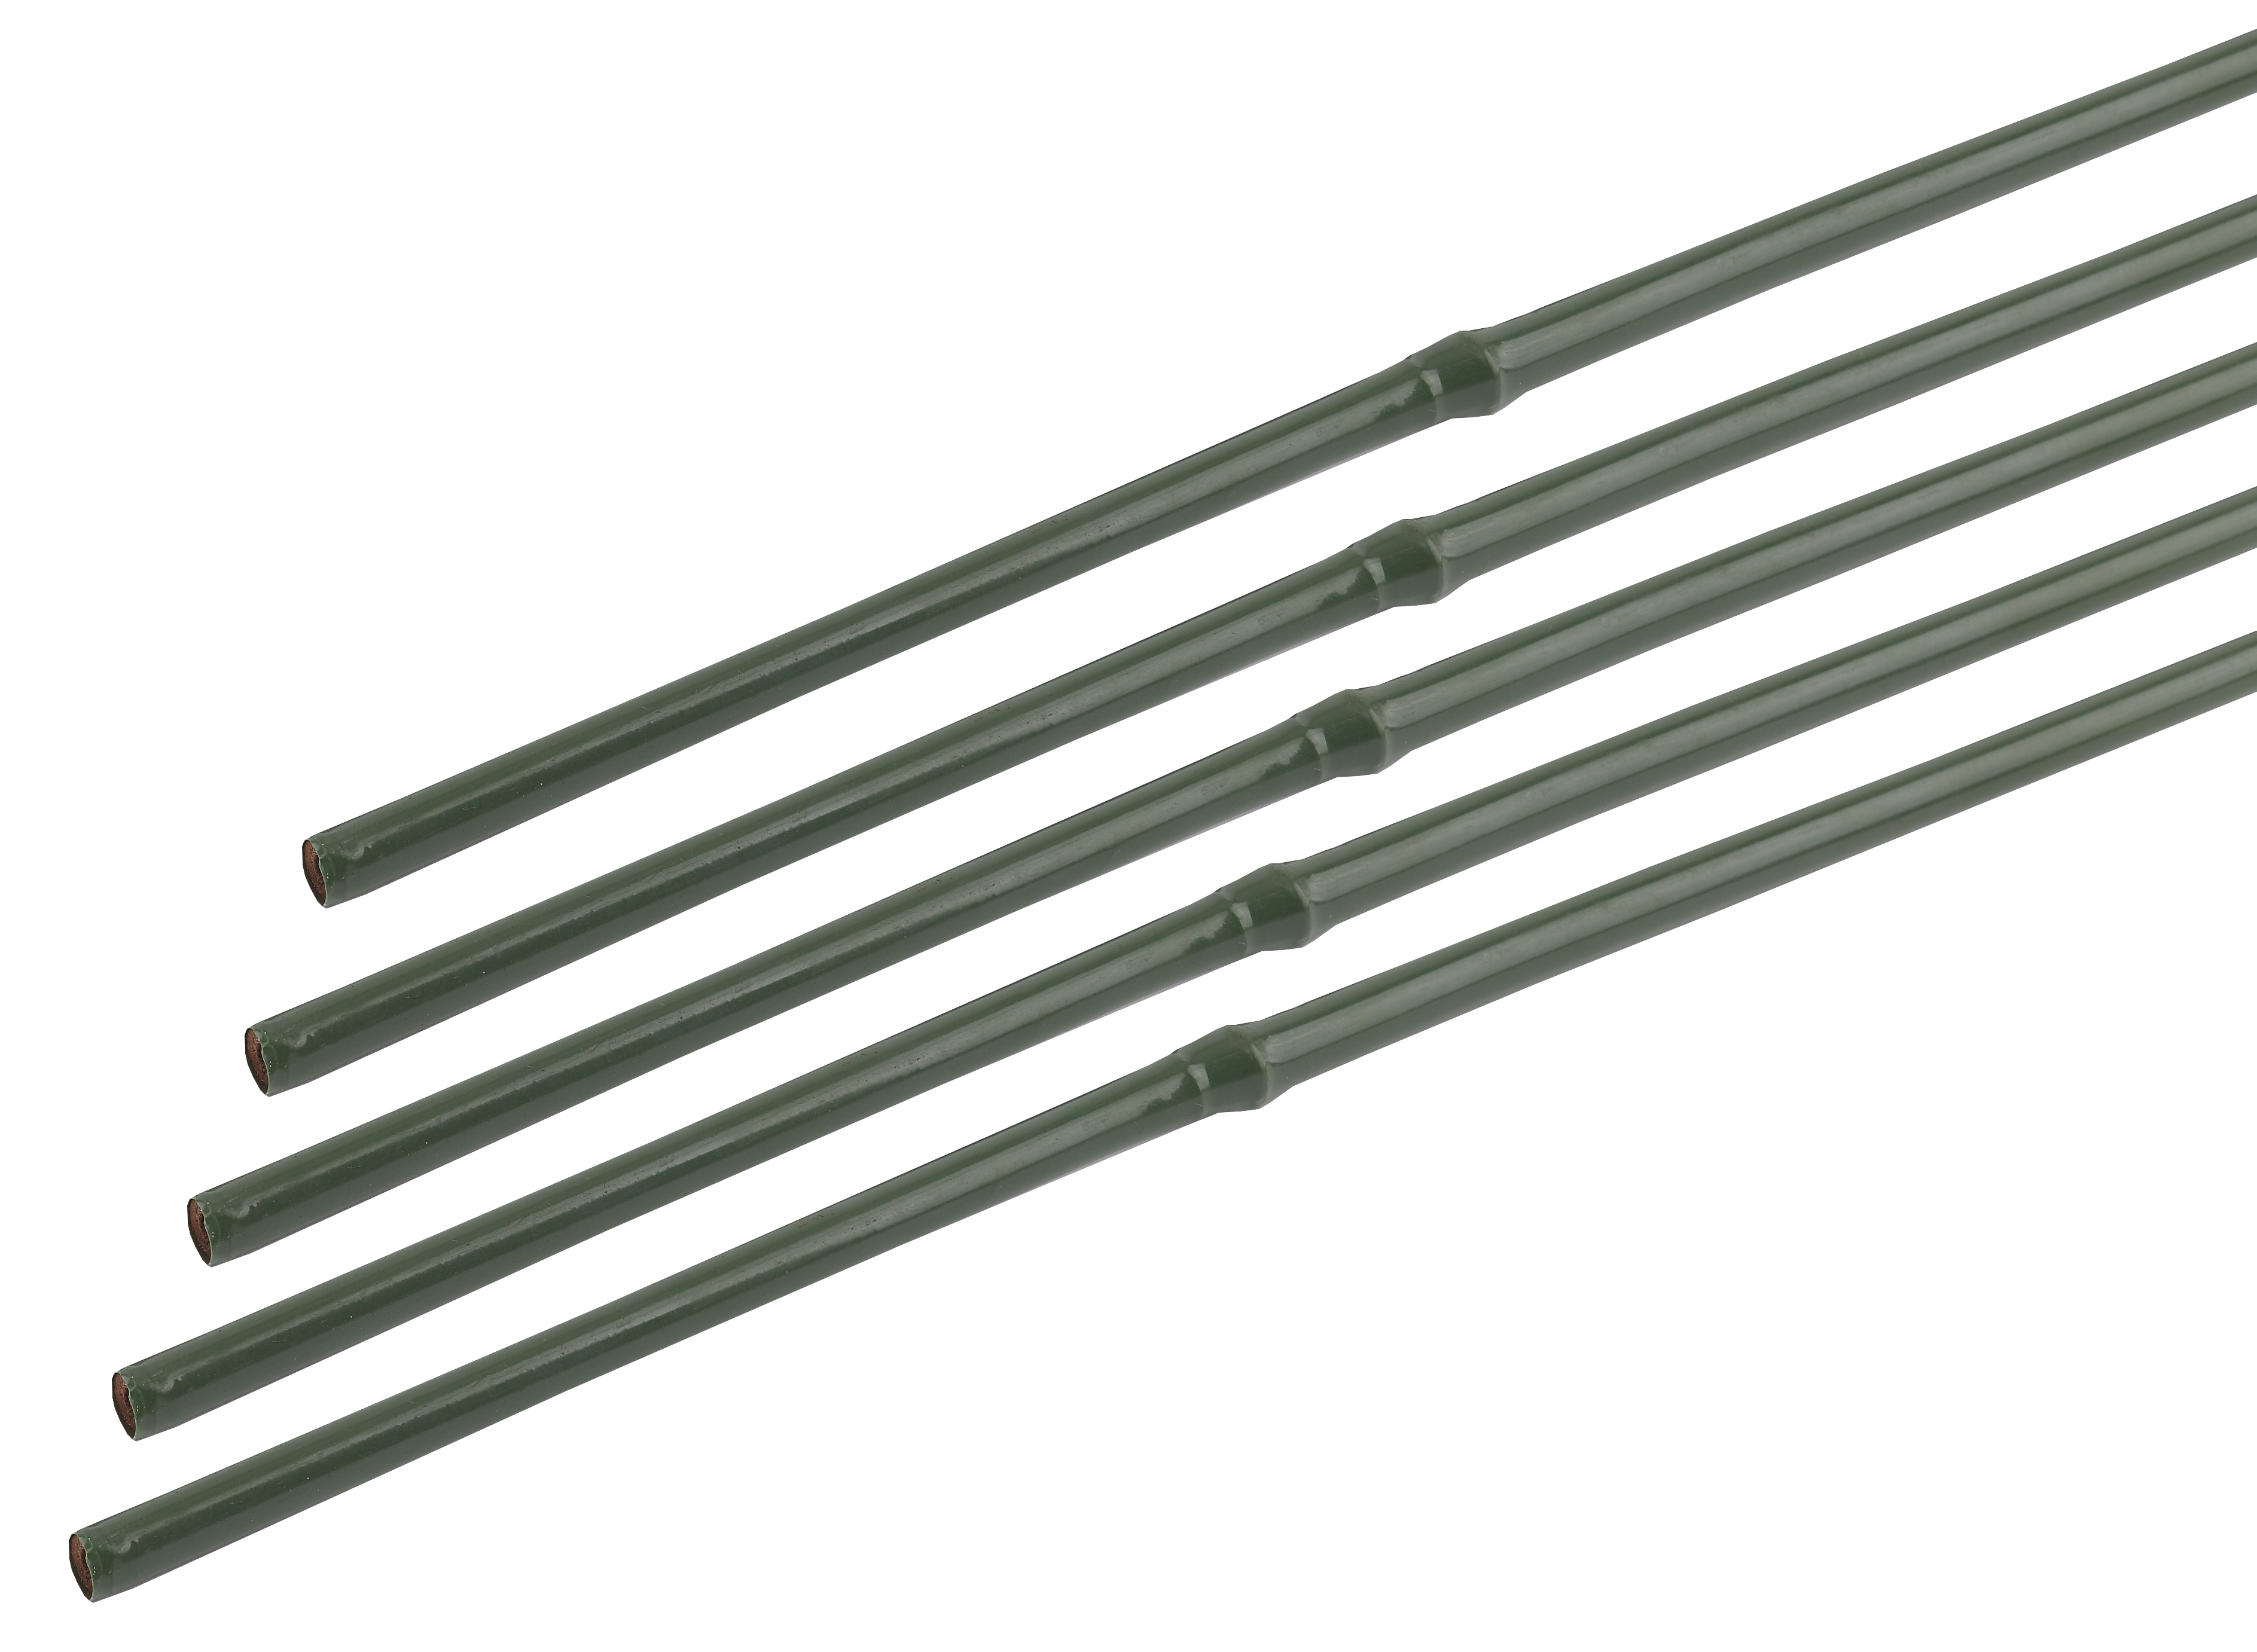 GACB-8-75 GREEN APPLE поддержка бамбук в пластике 8-75(Набор 5 шт) (20/980)